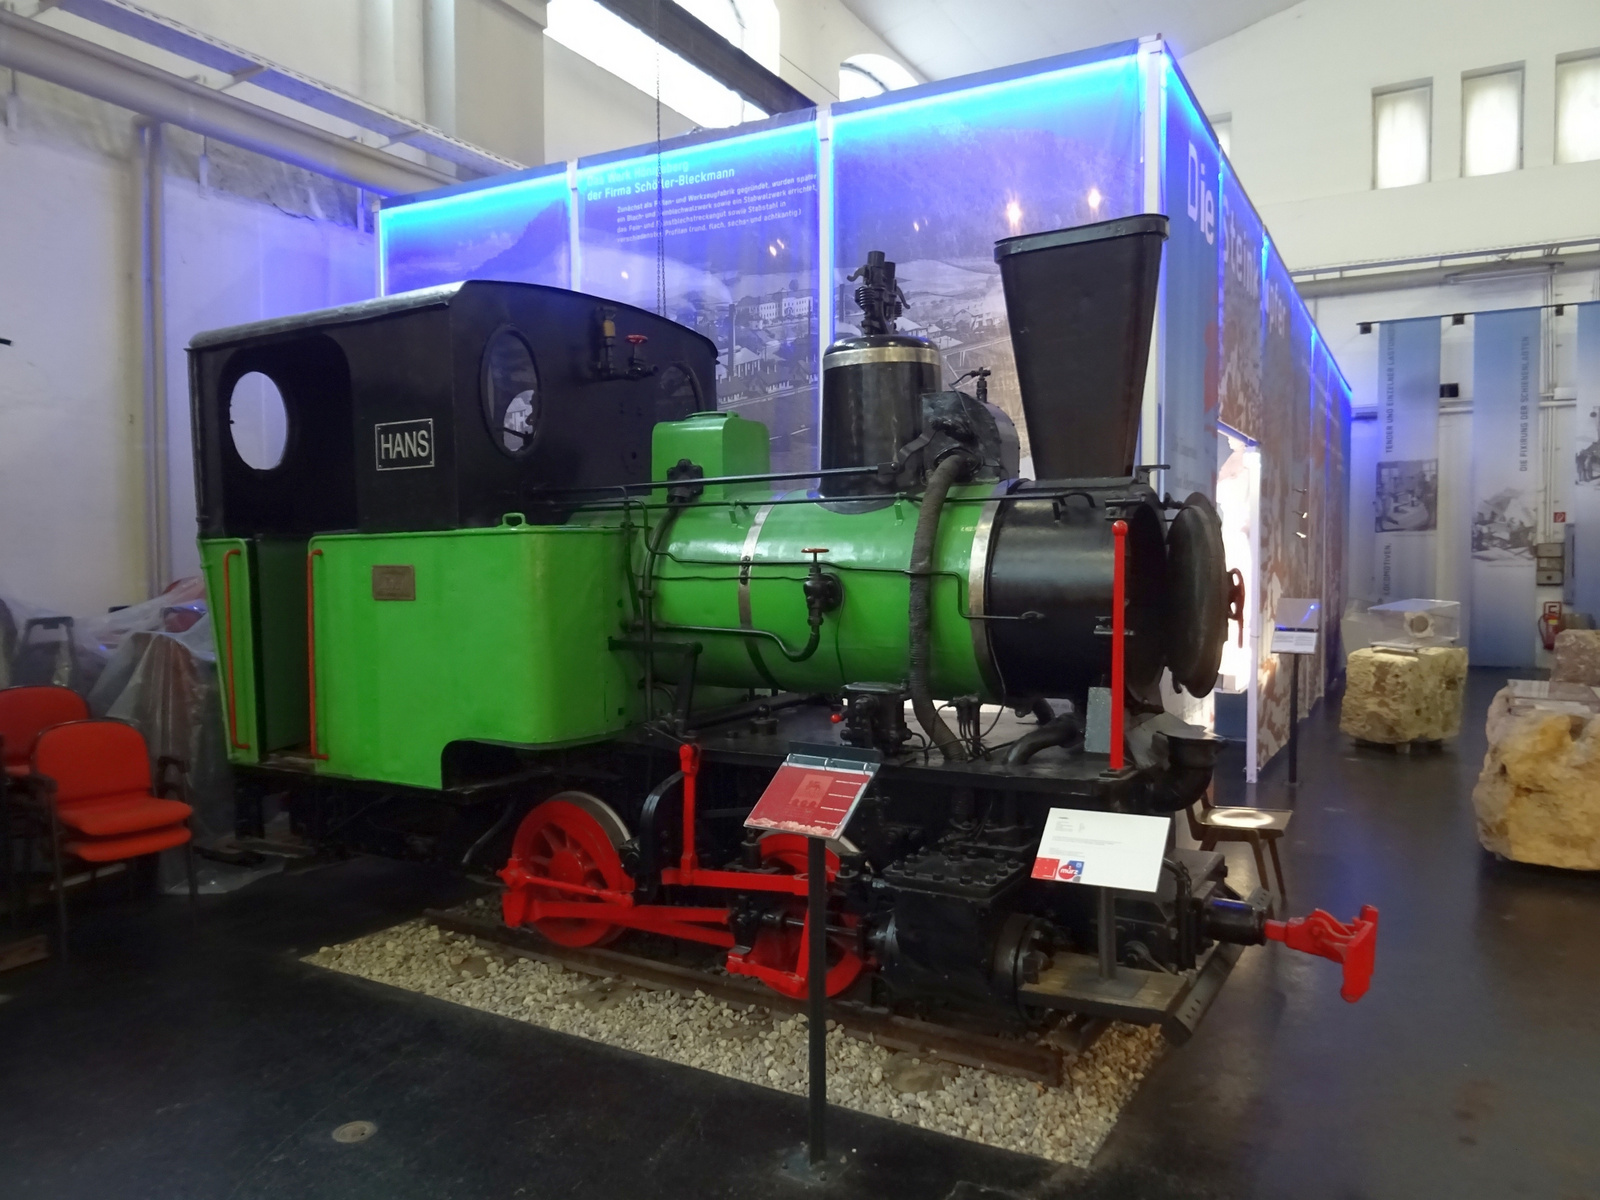 HANS - Südbahnmuseum, Mürzzuschlag